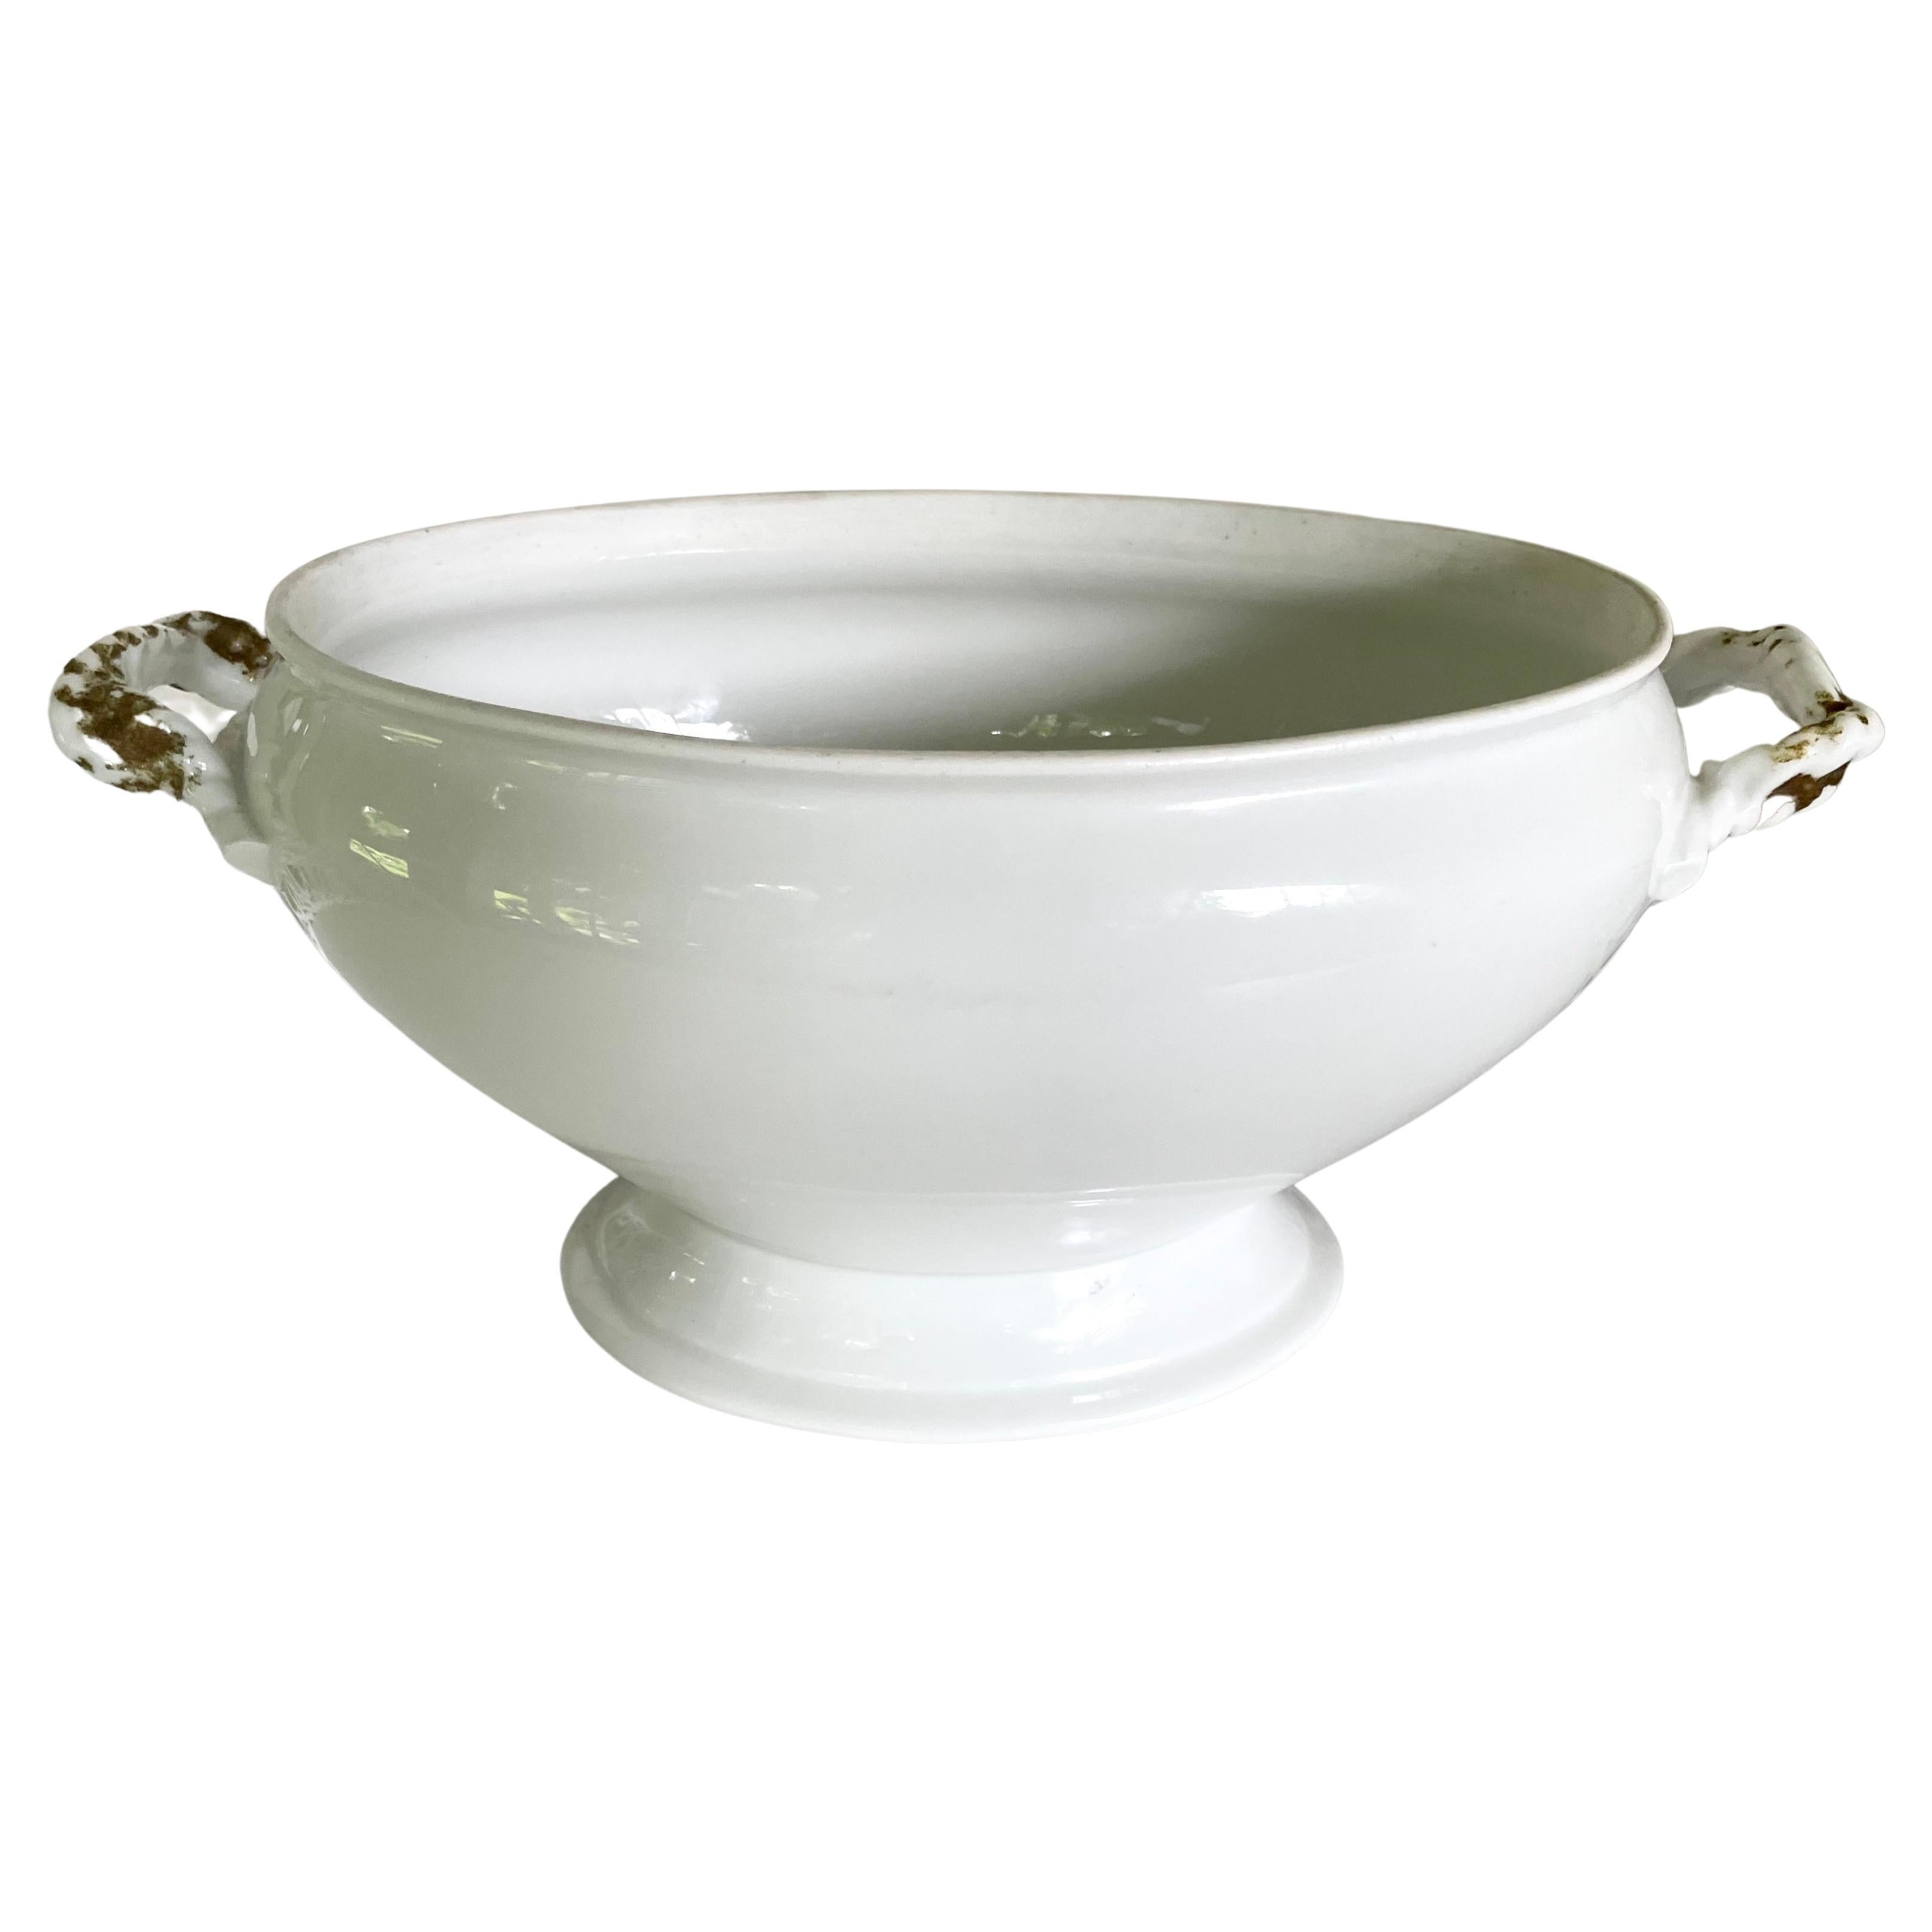 Vintage White Porcelain Limoges Nautical Cachepot / Tureen For Sale